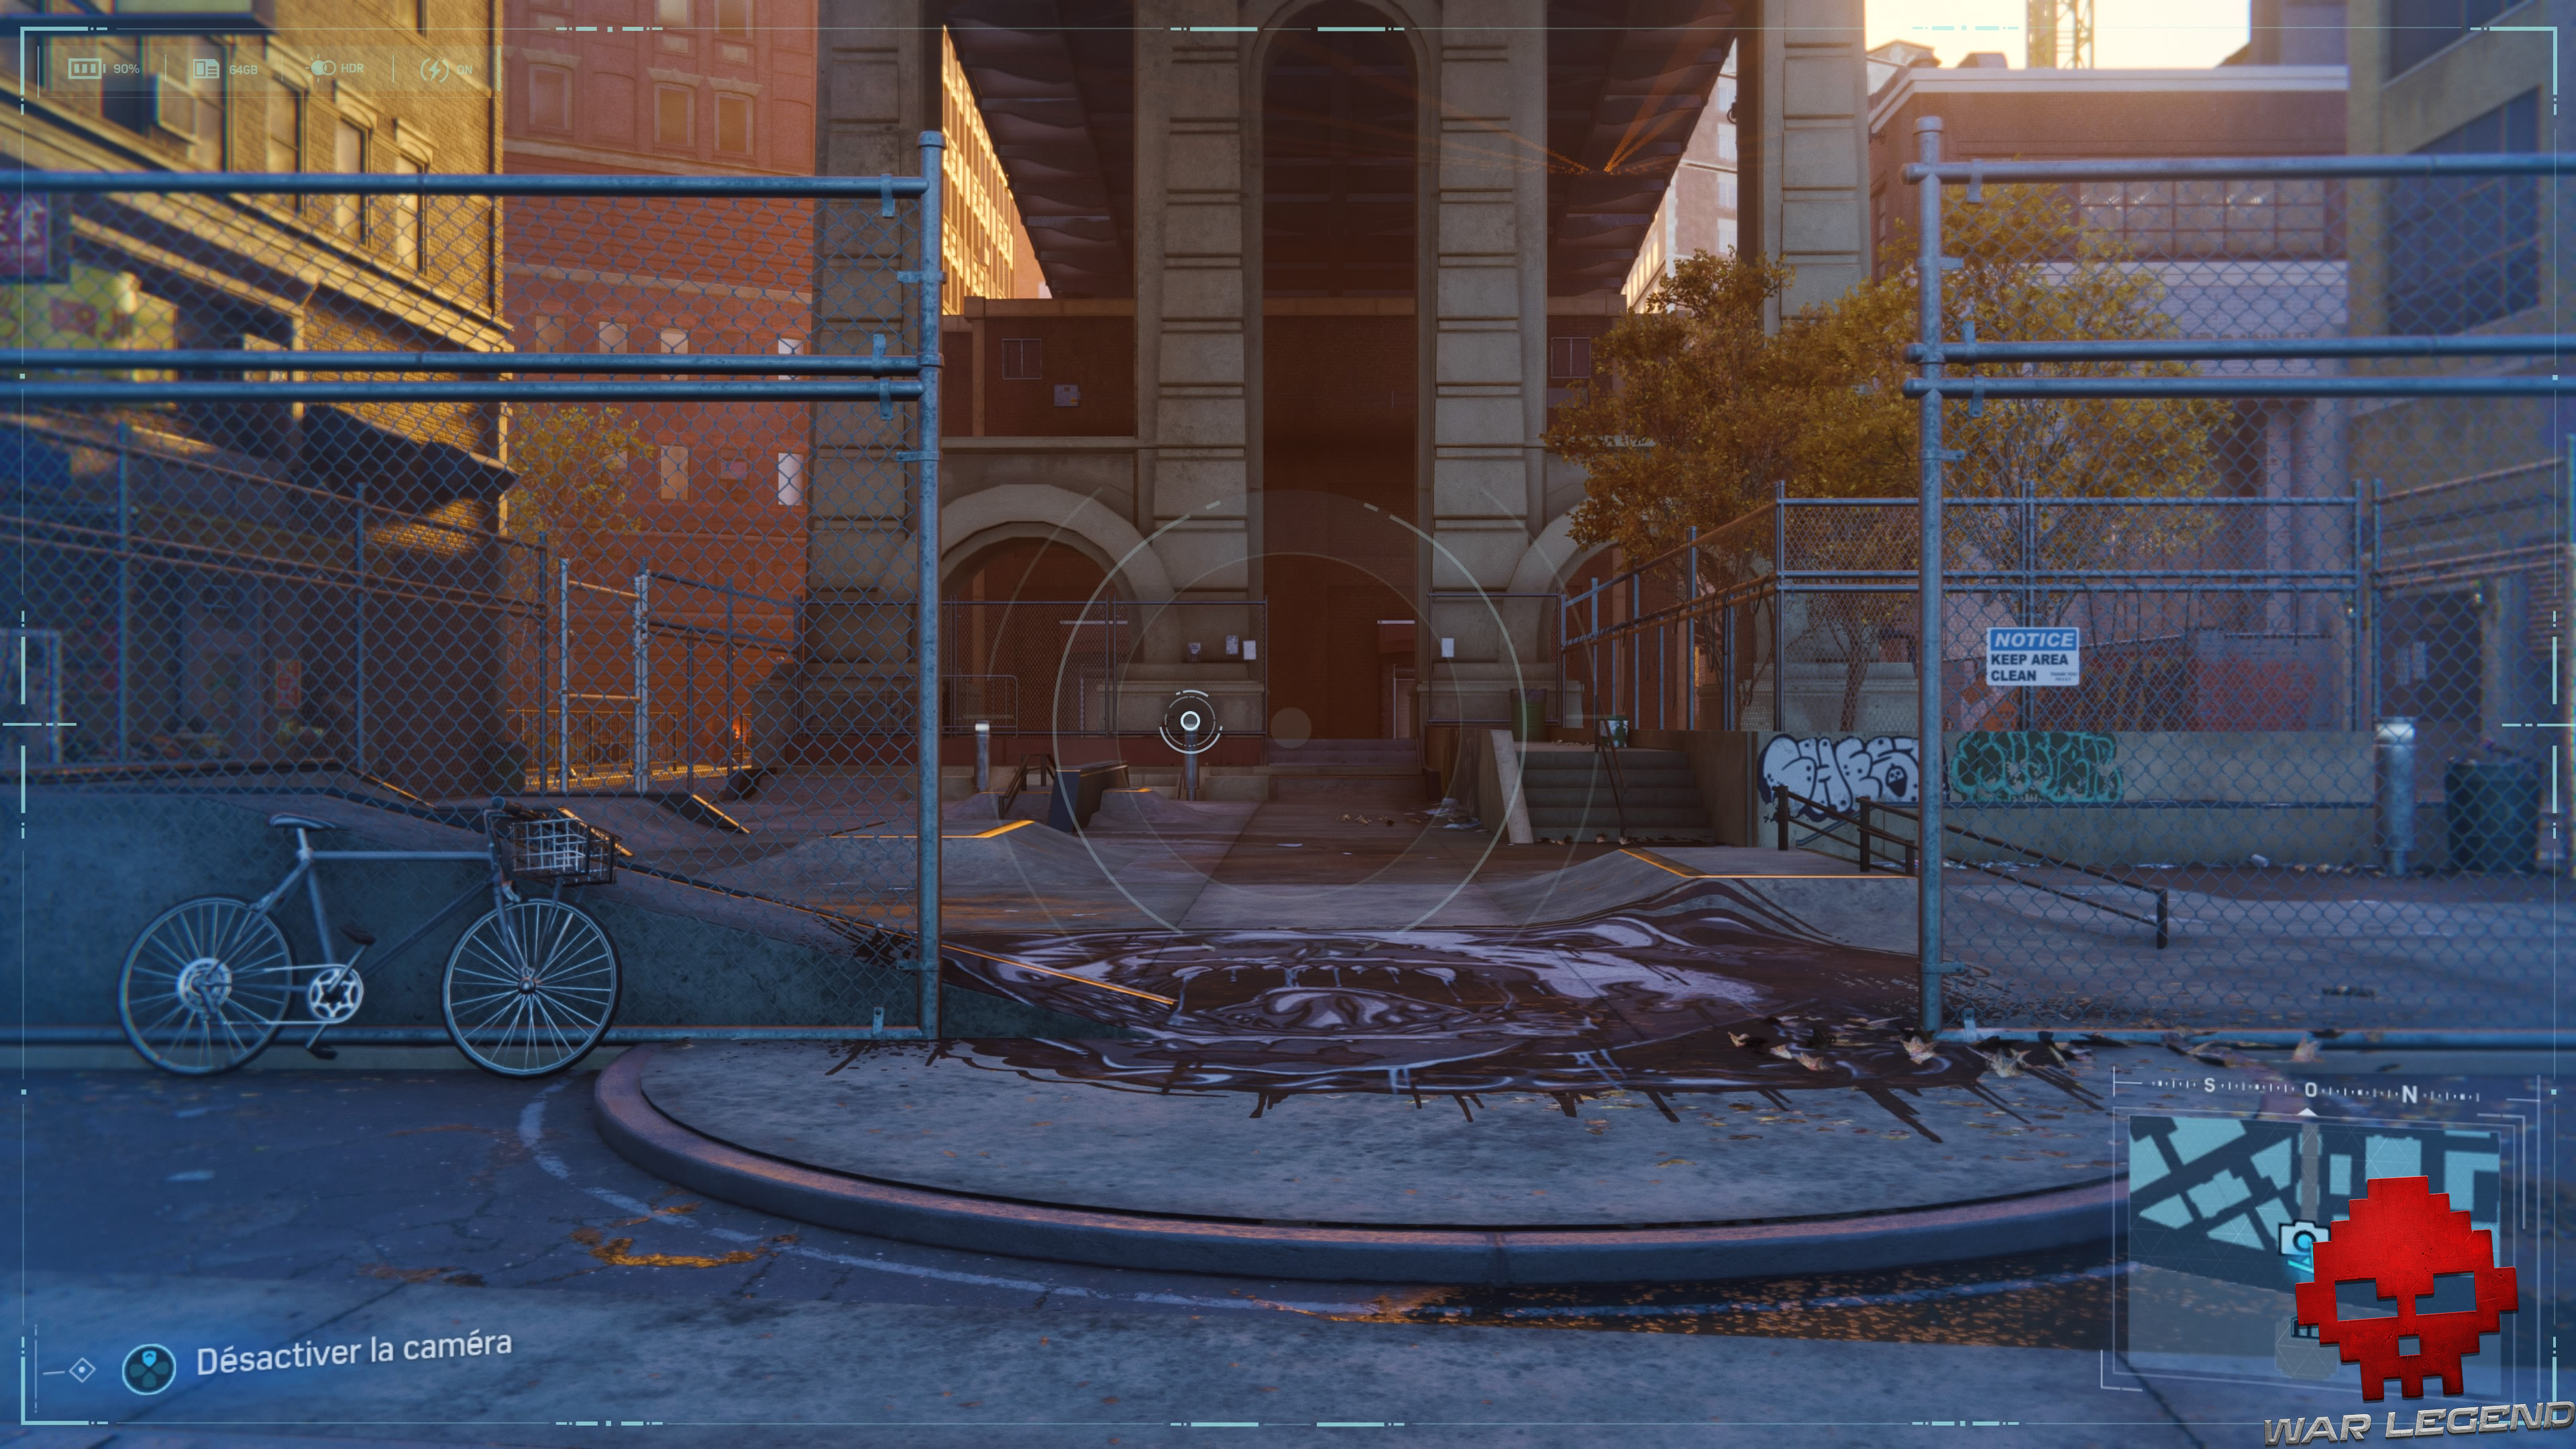 Spider-Man photo secrète skatepark de coleman's square